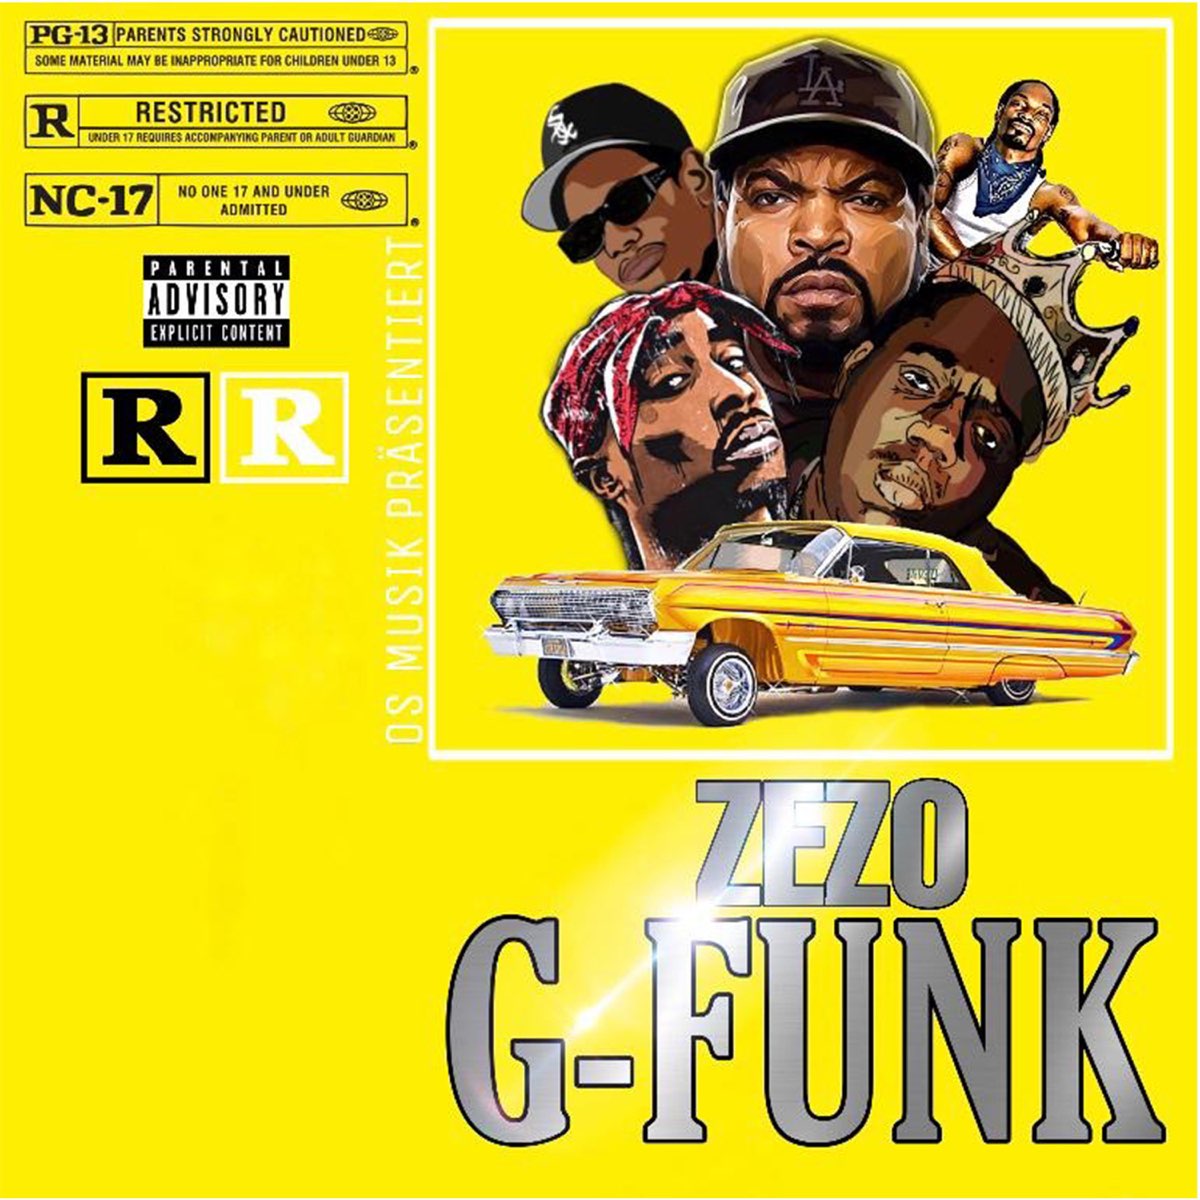 G Funk - Single - Album by OS Zezo - Apple Music